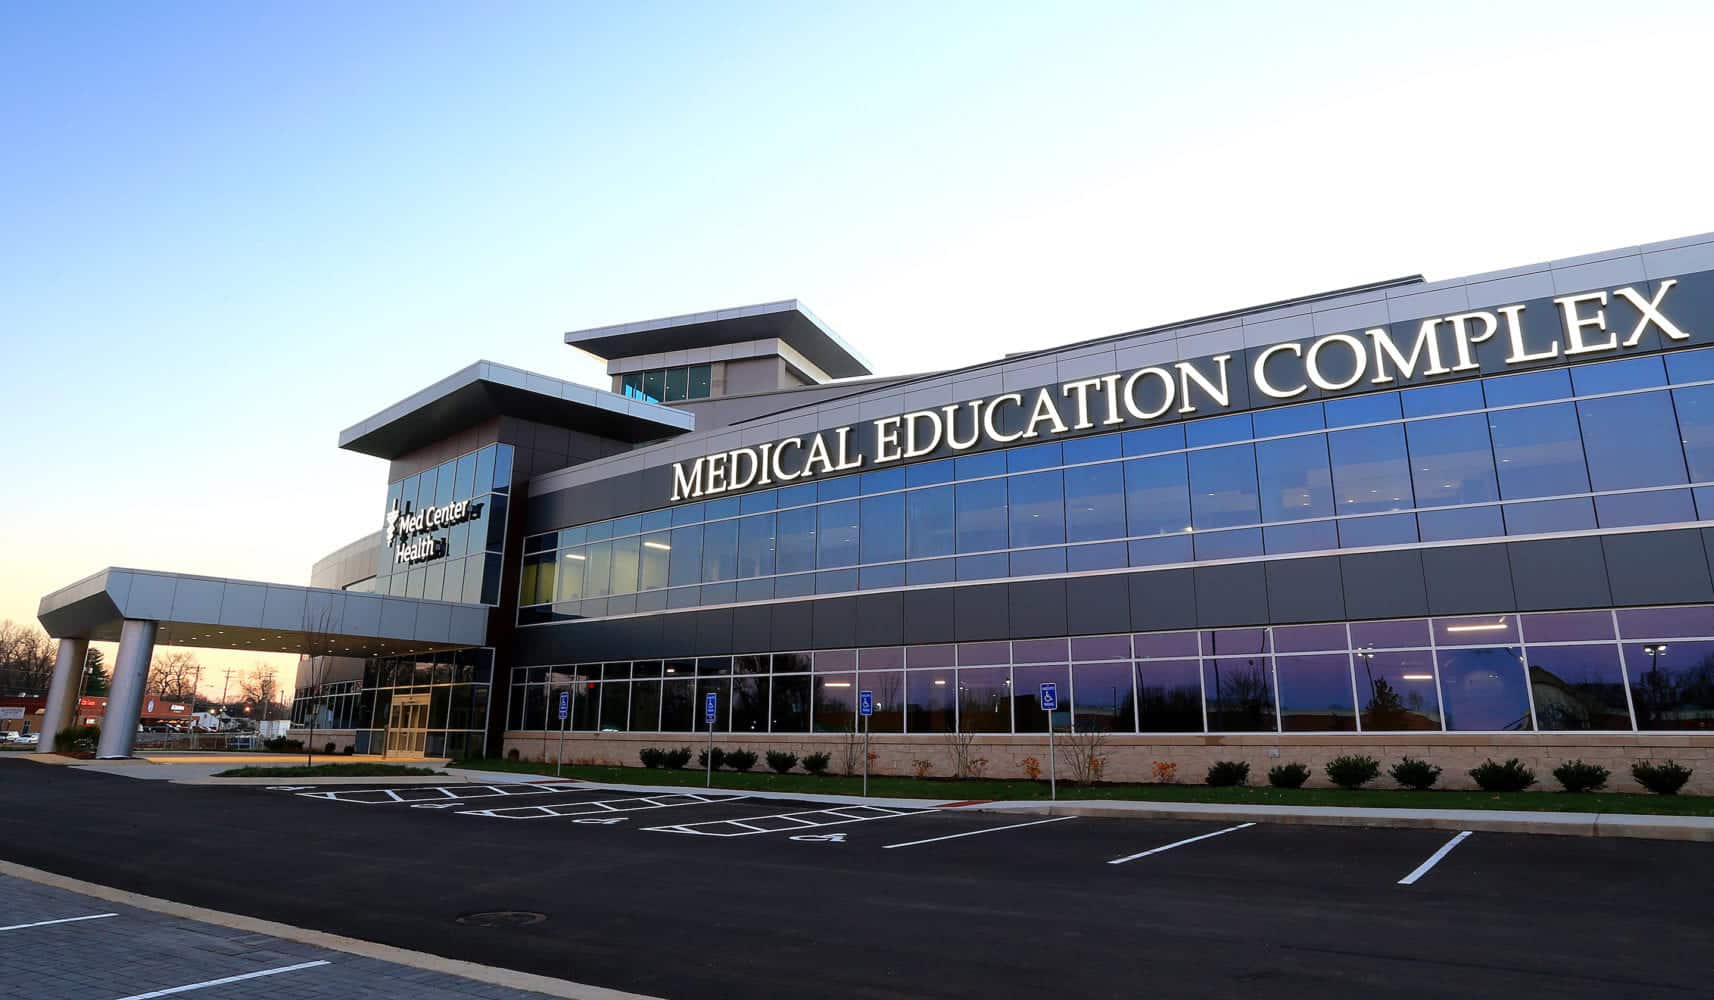 University-of-Kentucky-Medical-Education-Complex-1-e1566937506537